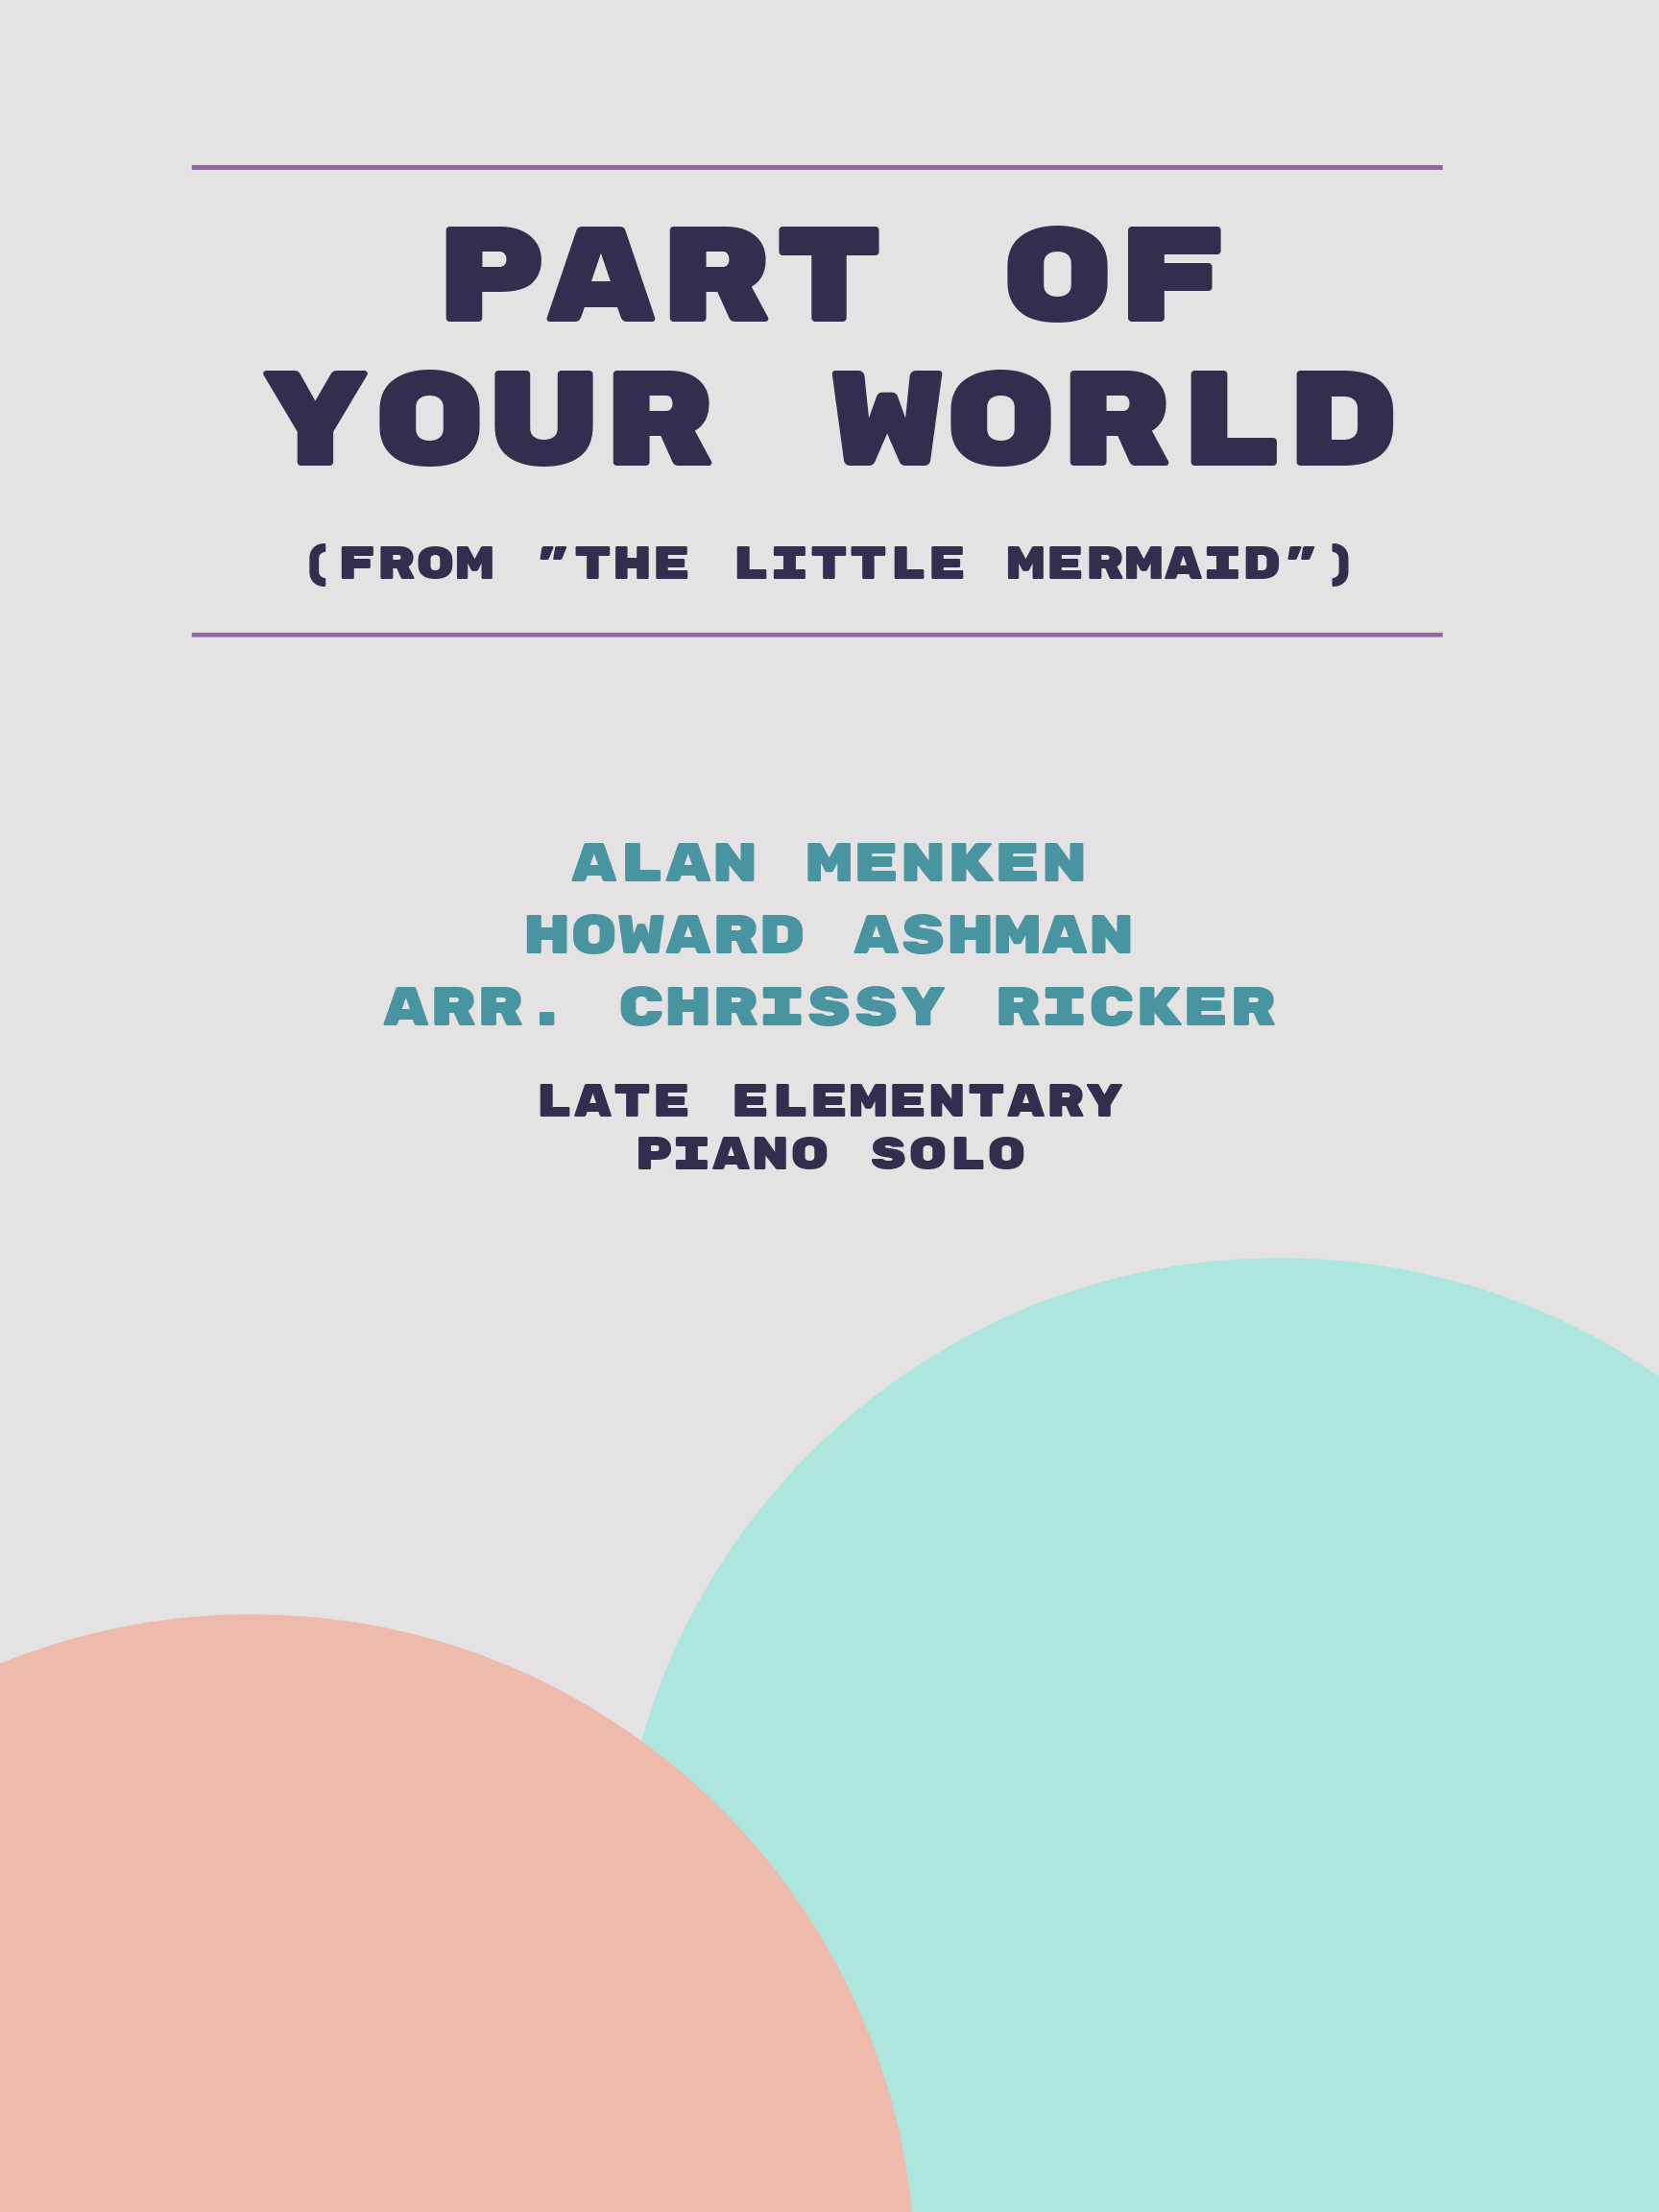 Part of Your World by Alan Menken, Howard Ashman